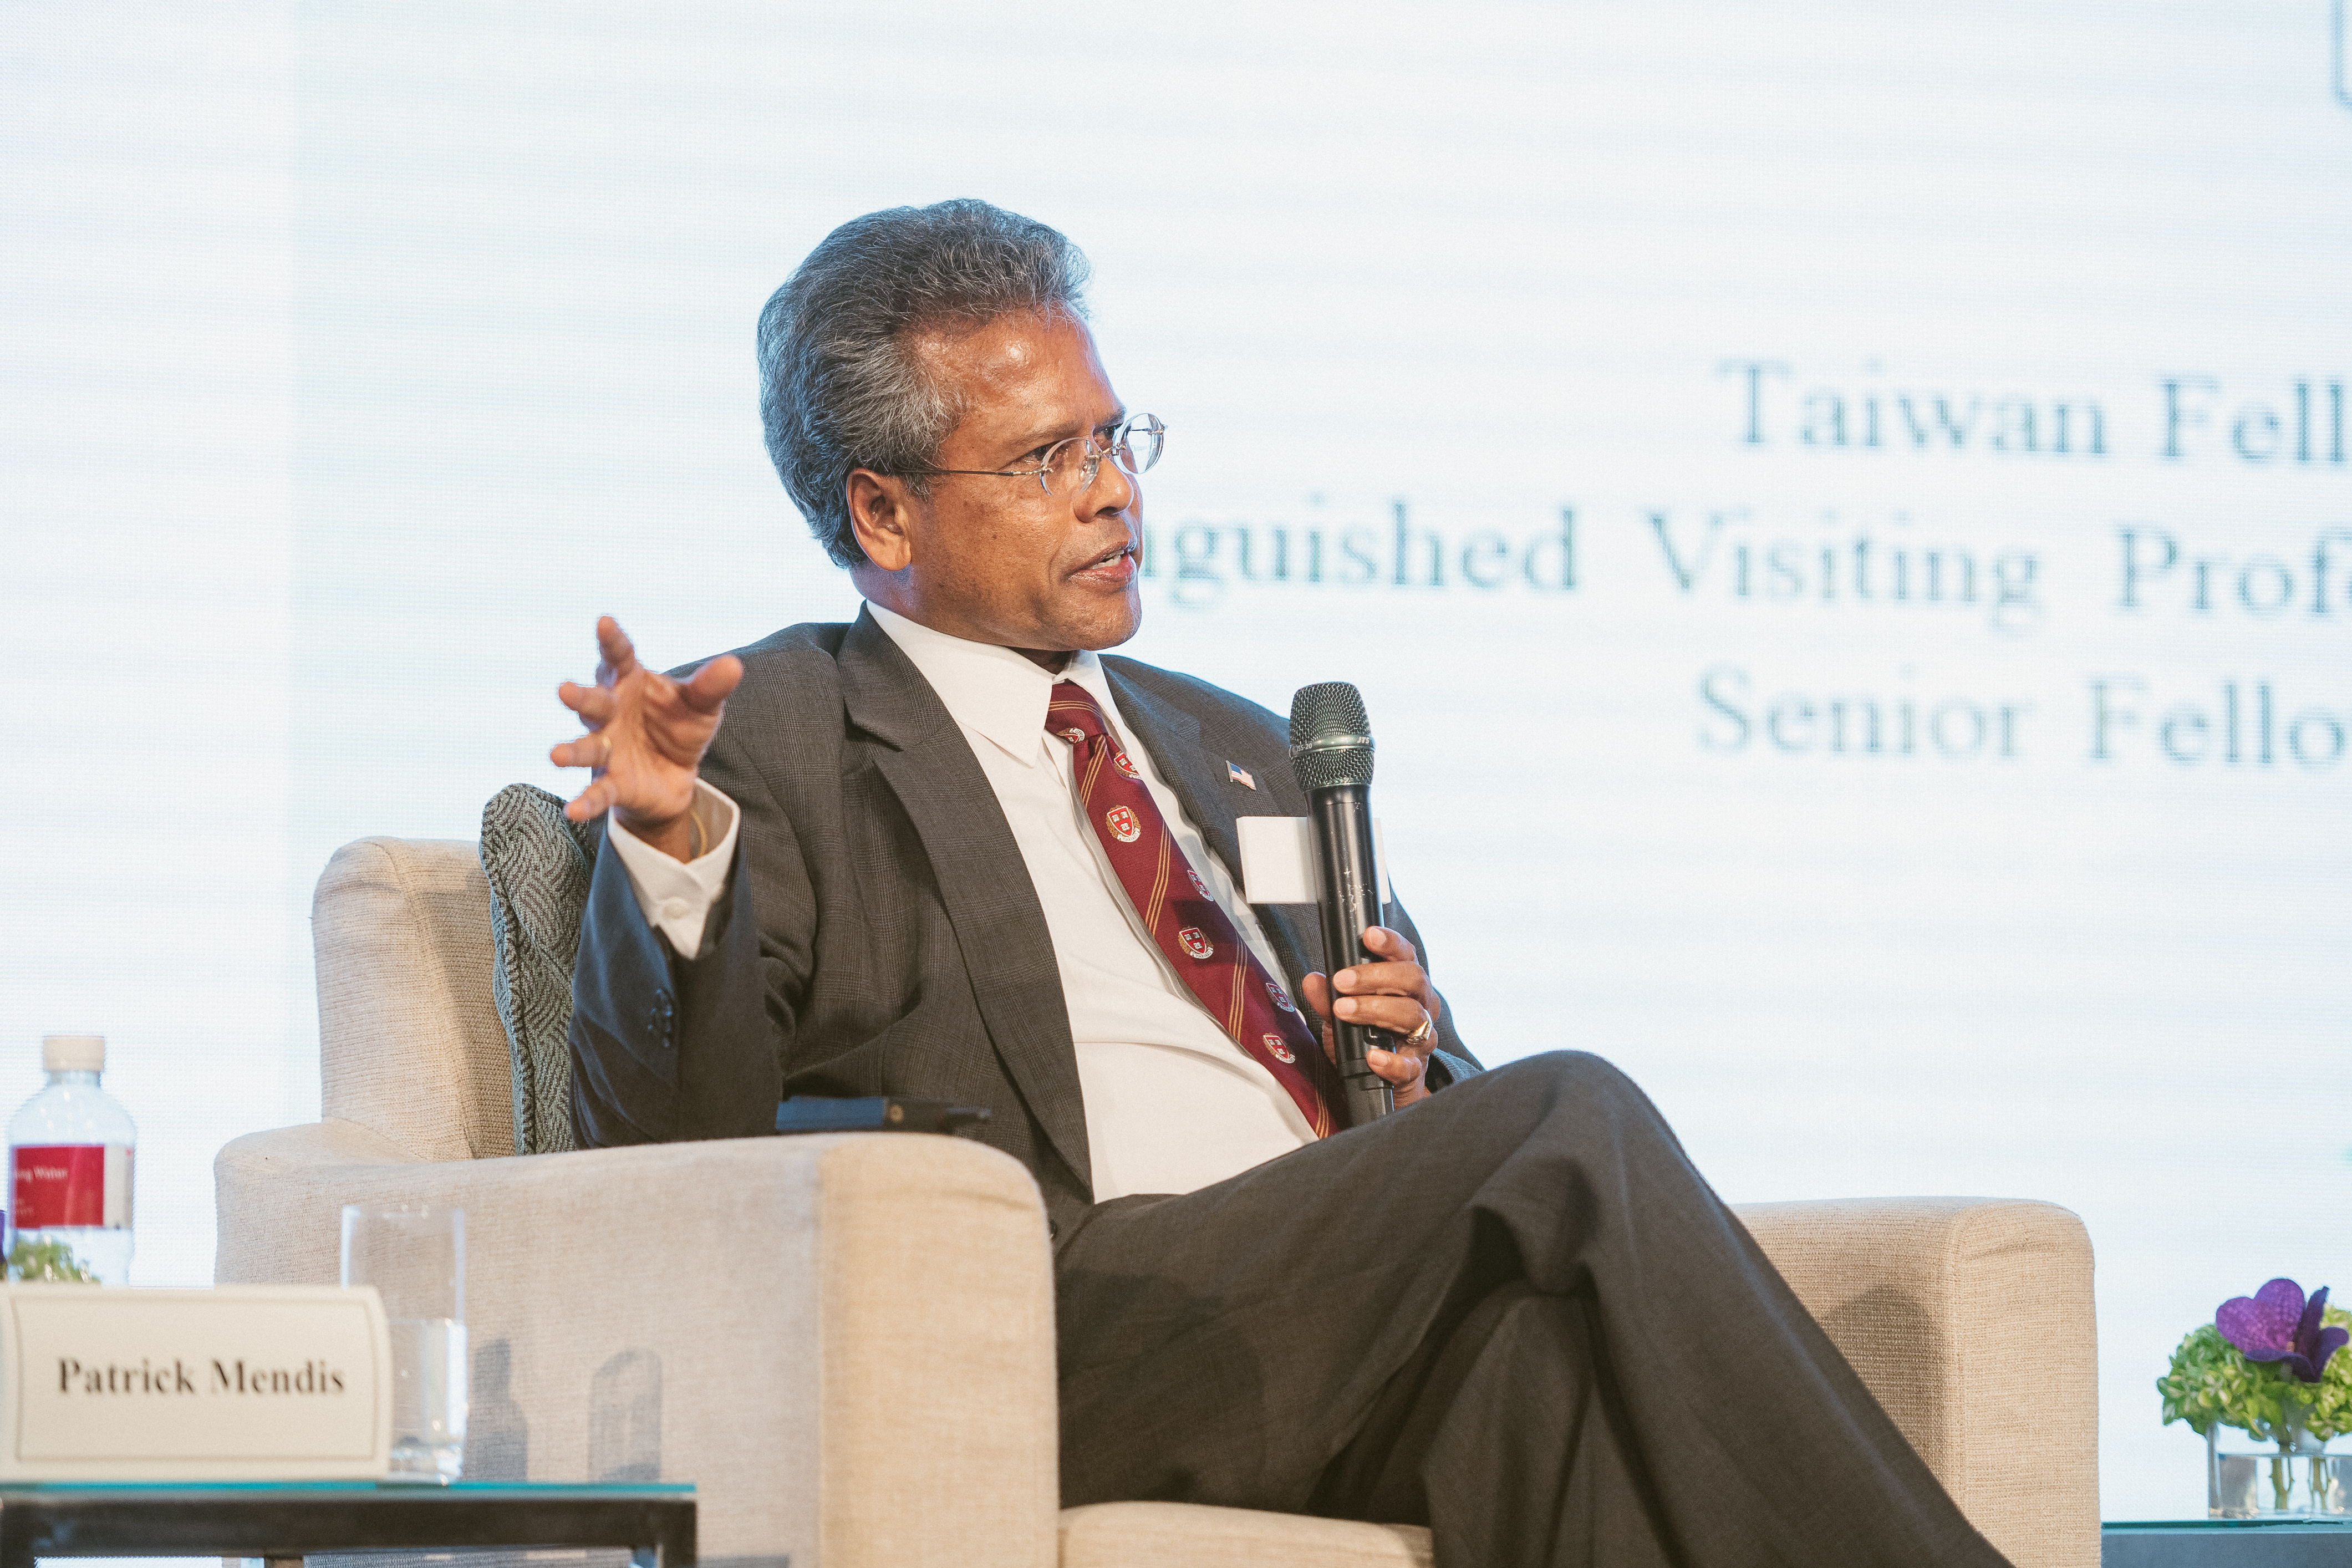 Patrick Mendis, Distinguished Visiting Professor of National Chengchi University, as panelist